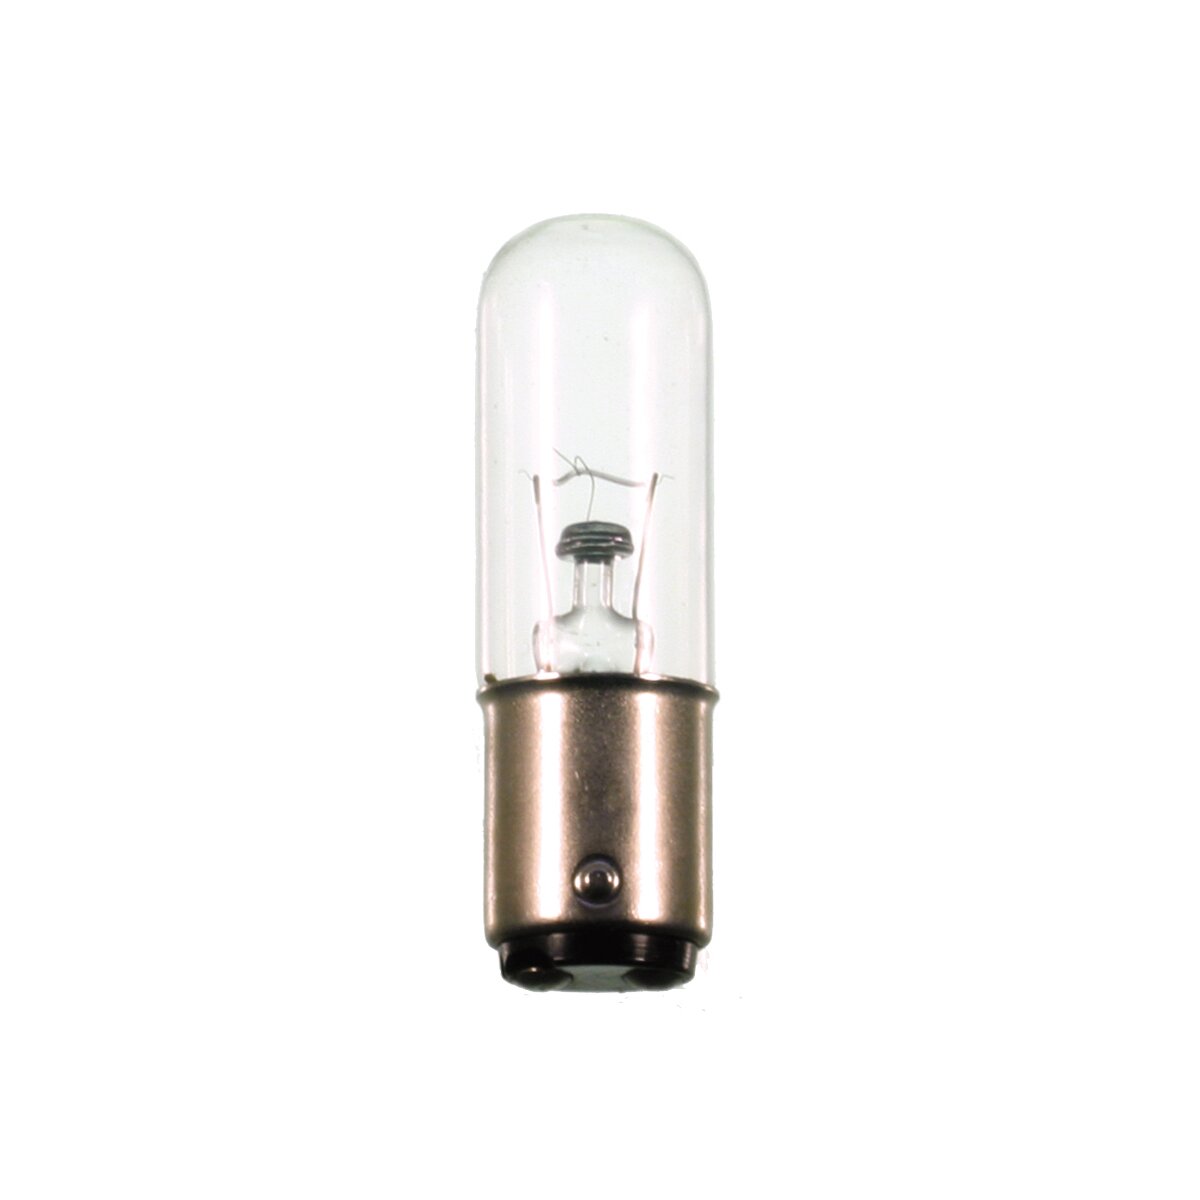 https://www.licht-lampen-leuchtmittel.de/media/image/product/1443/lg/roehrenlampe-16x54mm-ba15d-24v-5w-25718.jpg